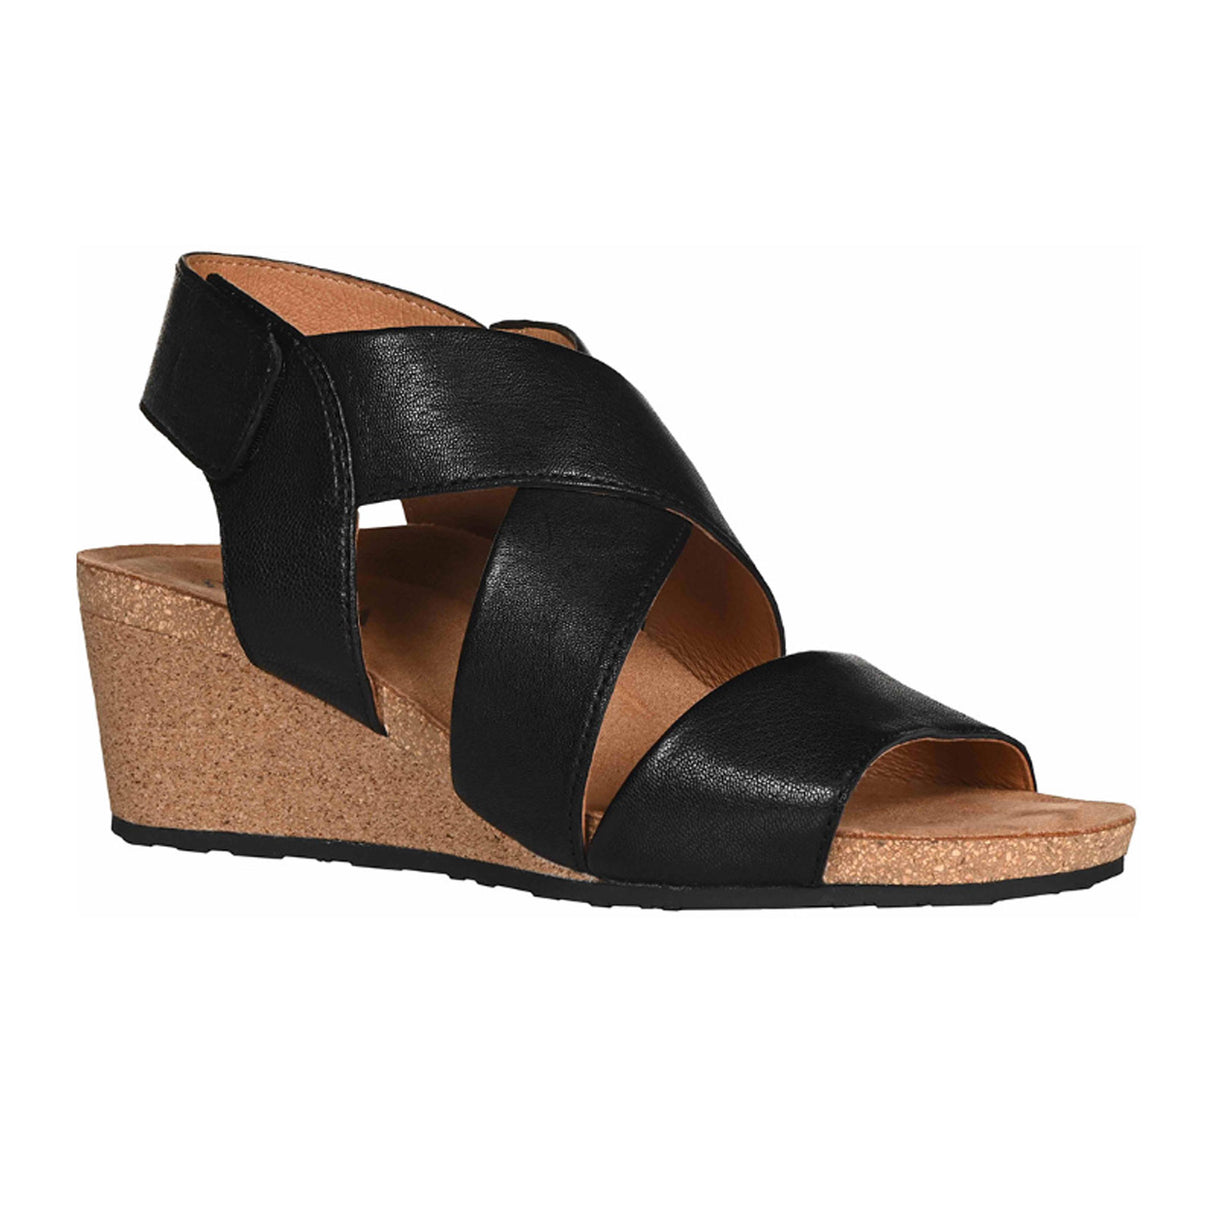 Salvia Robyn Wedge Sandal (Women) - Black Sheep Nappa Sandals - Wedge - The Heel Shoe Fitters